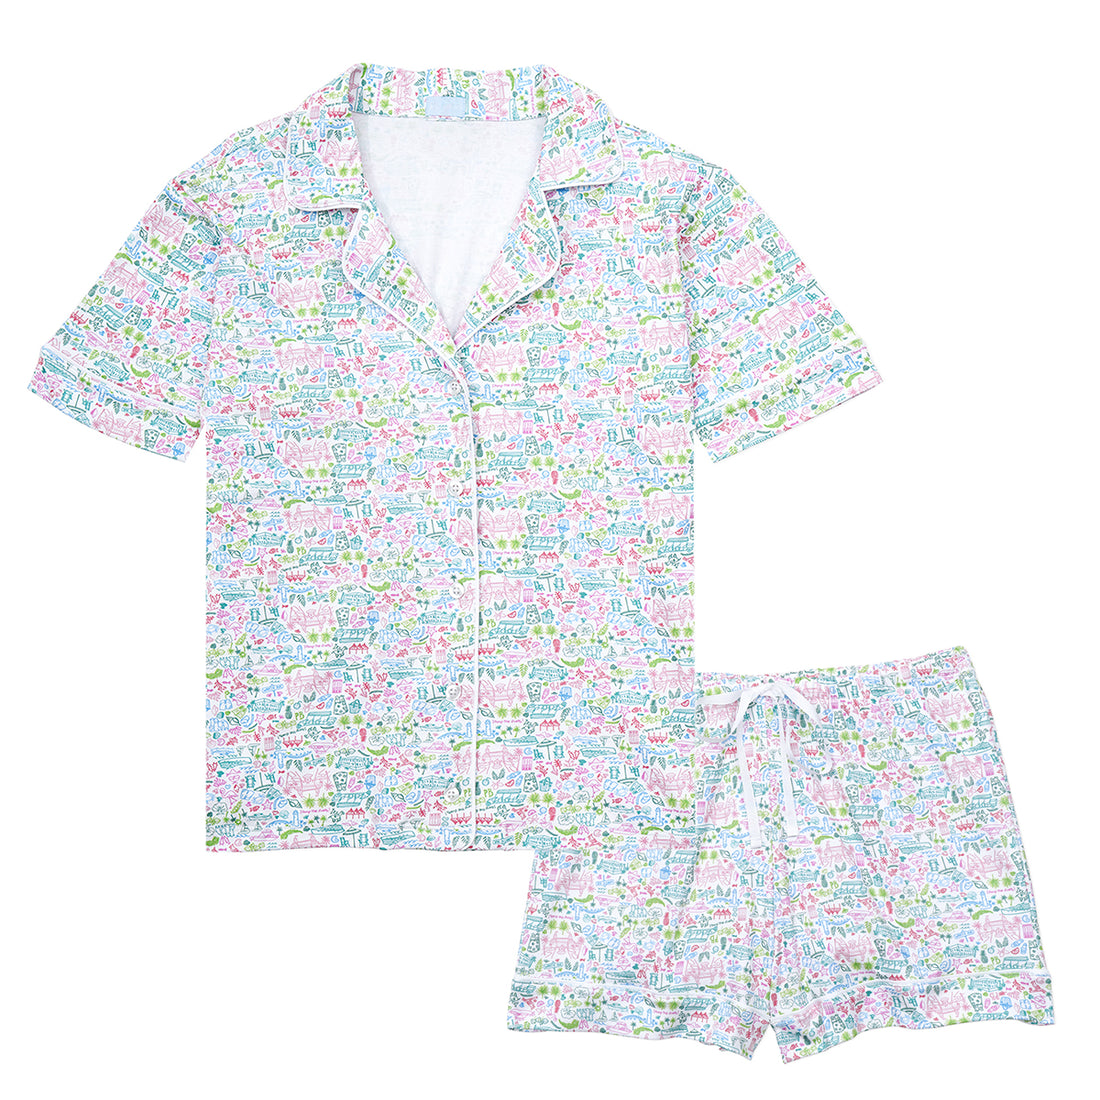 Matching Pyjamas & Short PJs - Palm Beach